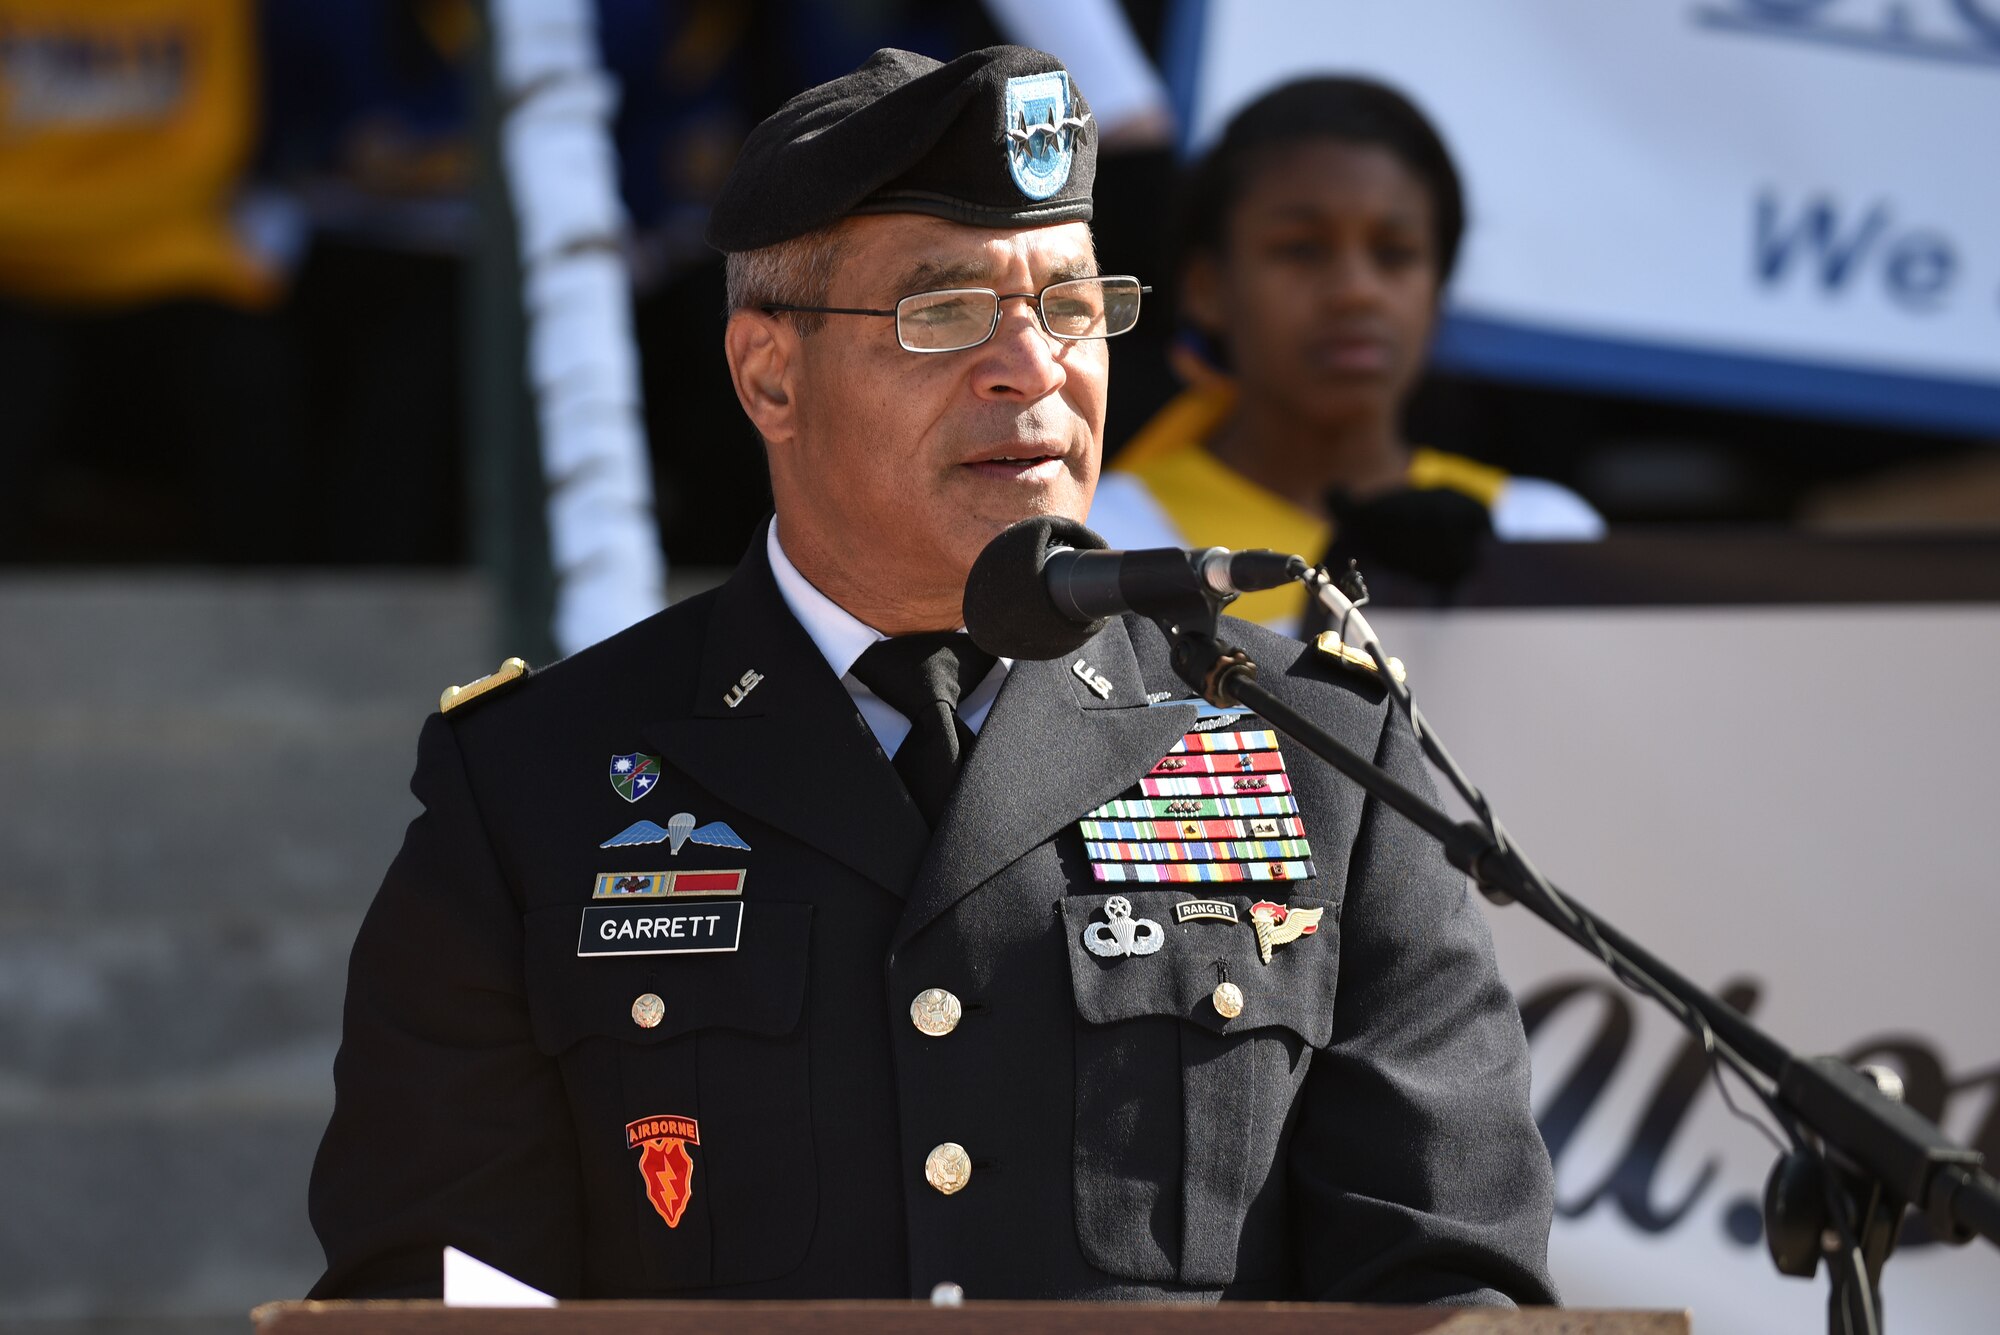 U.S. Army Lt. Gen. Michael Garrett, U.S. Army Central commanding general, speaks to attendees during a Veterans Day Celebration in Sumter, South Carolina, Nov. 11, 2017.